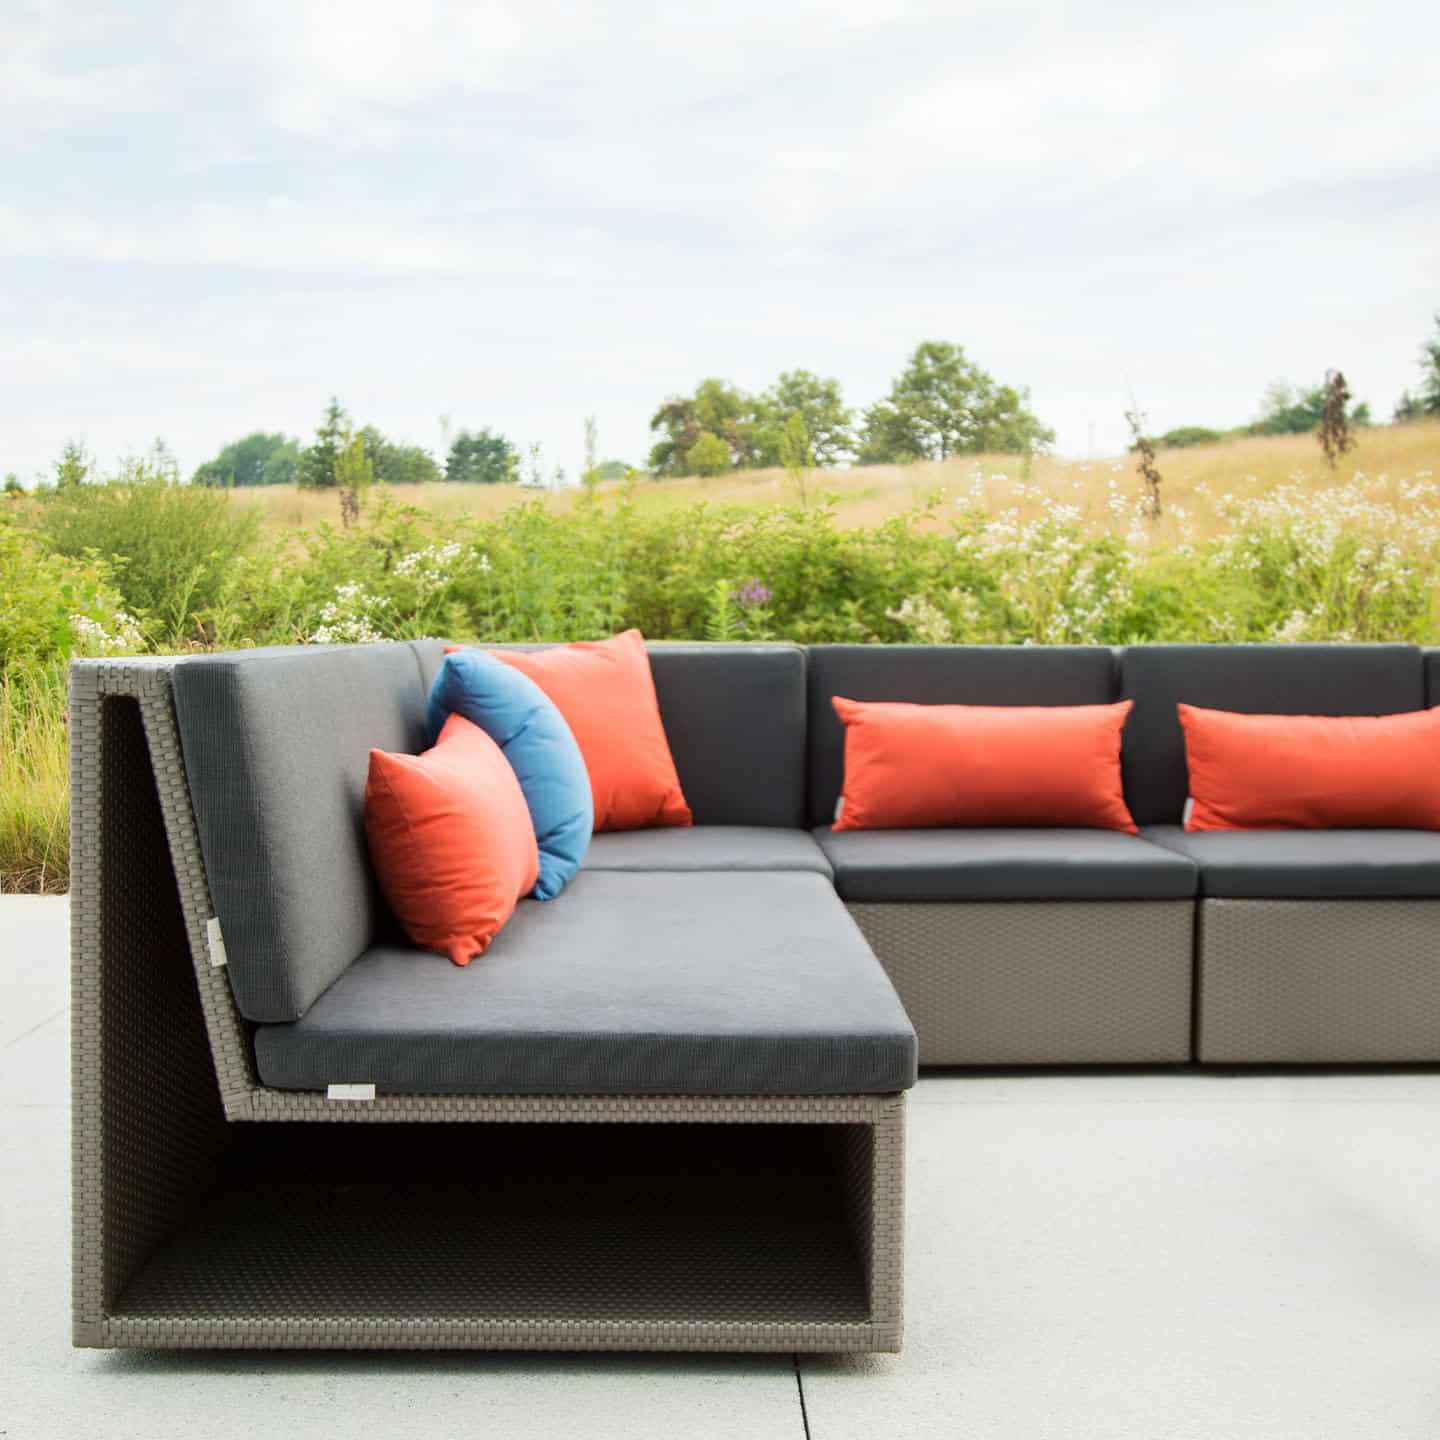 Haworth sofa set for outdoors